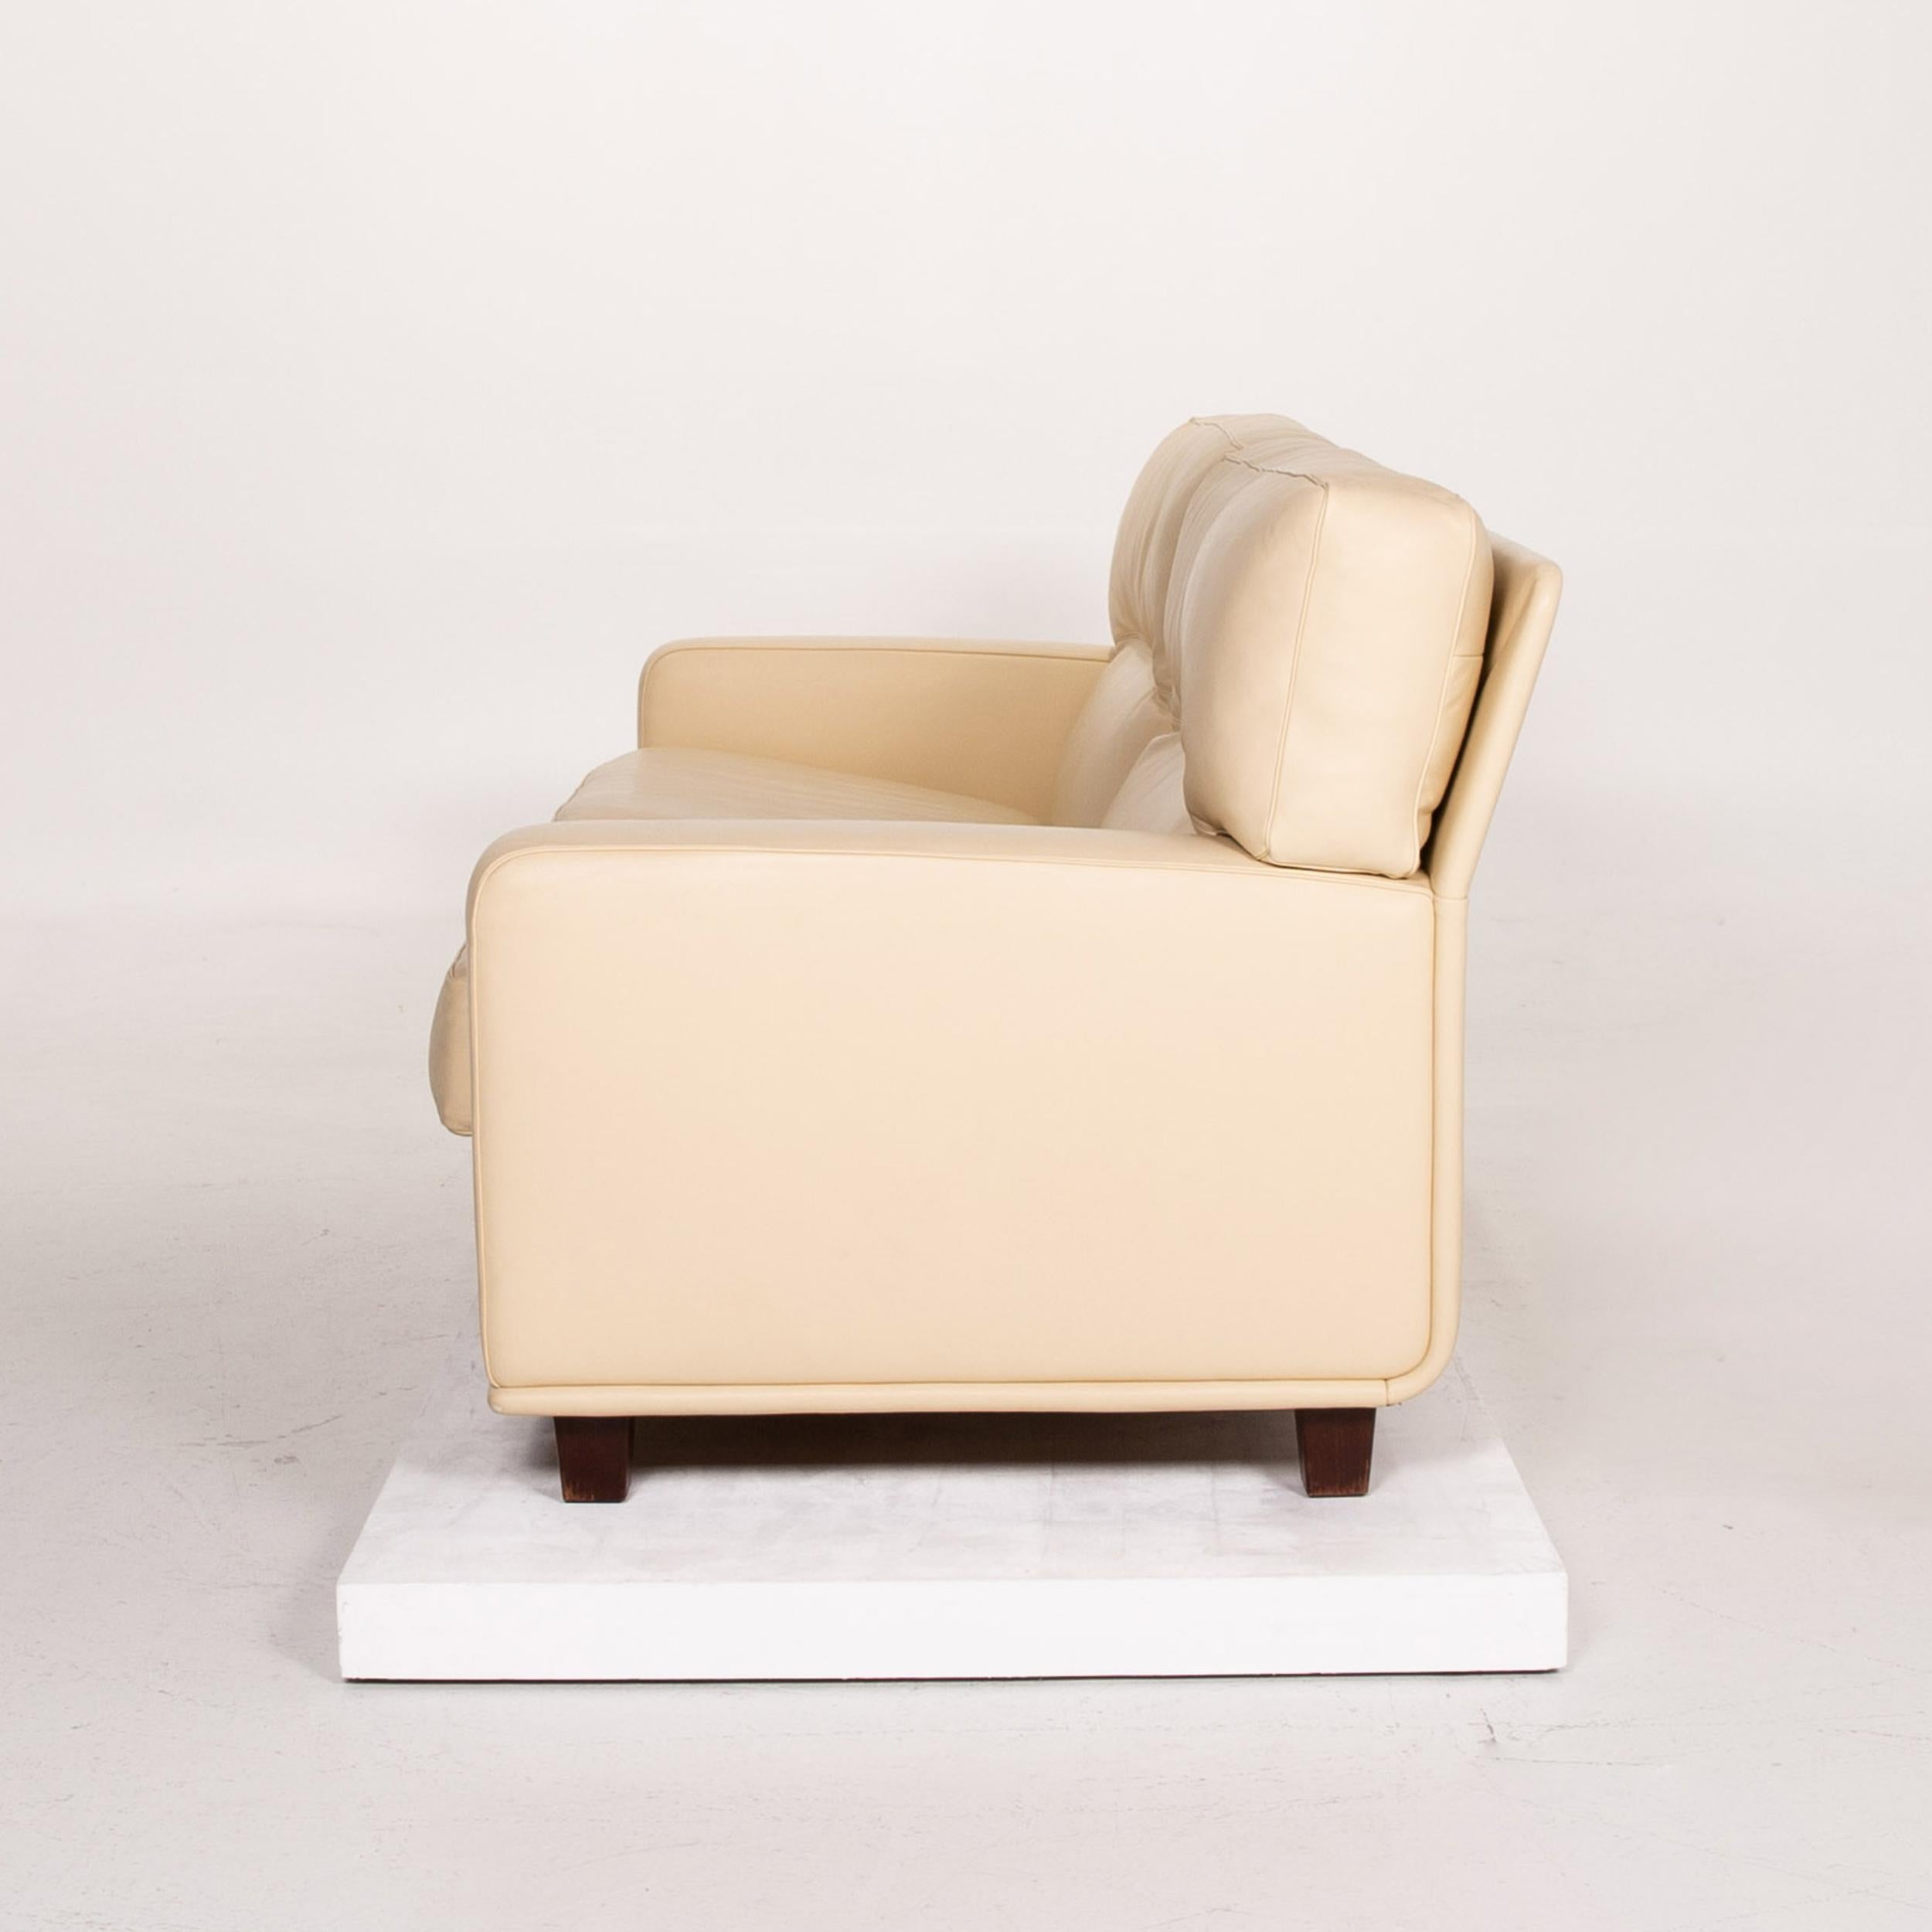 Poltrona Frau Leather Sofa Cream Two-Seat Couch 6